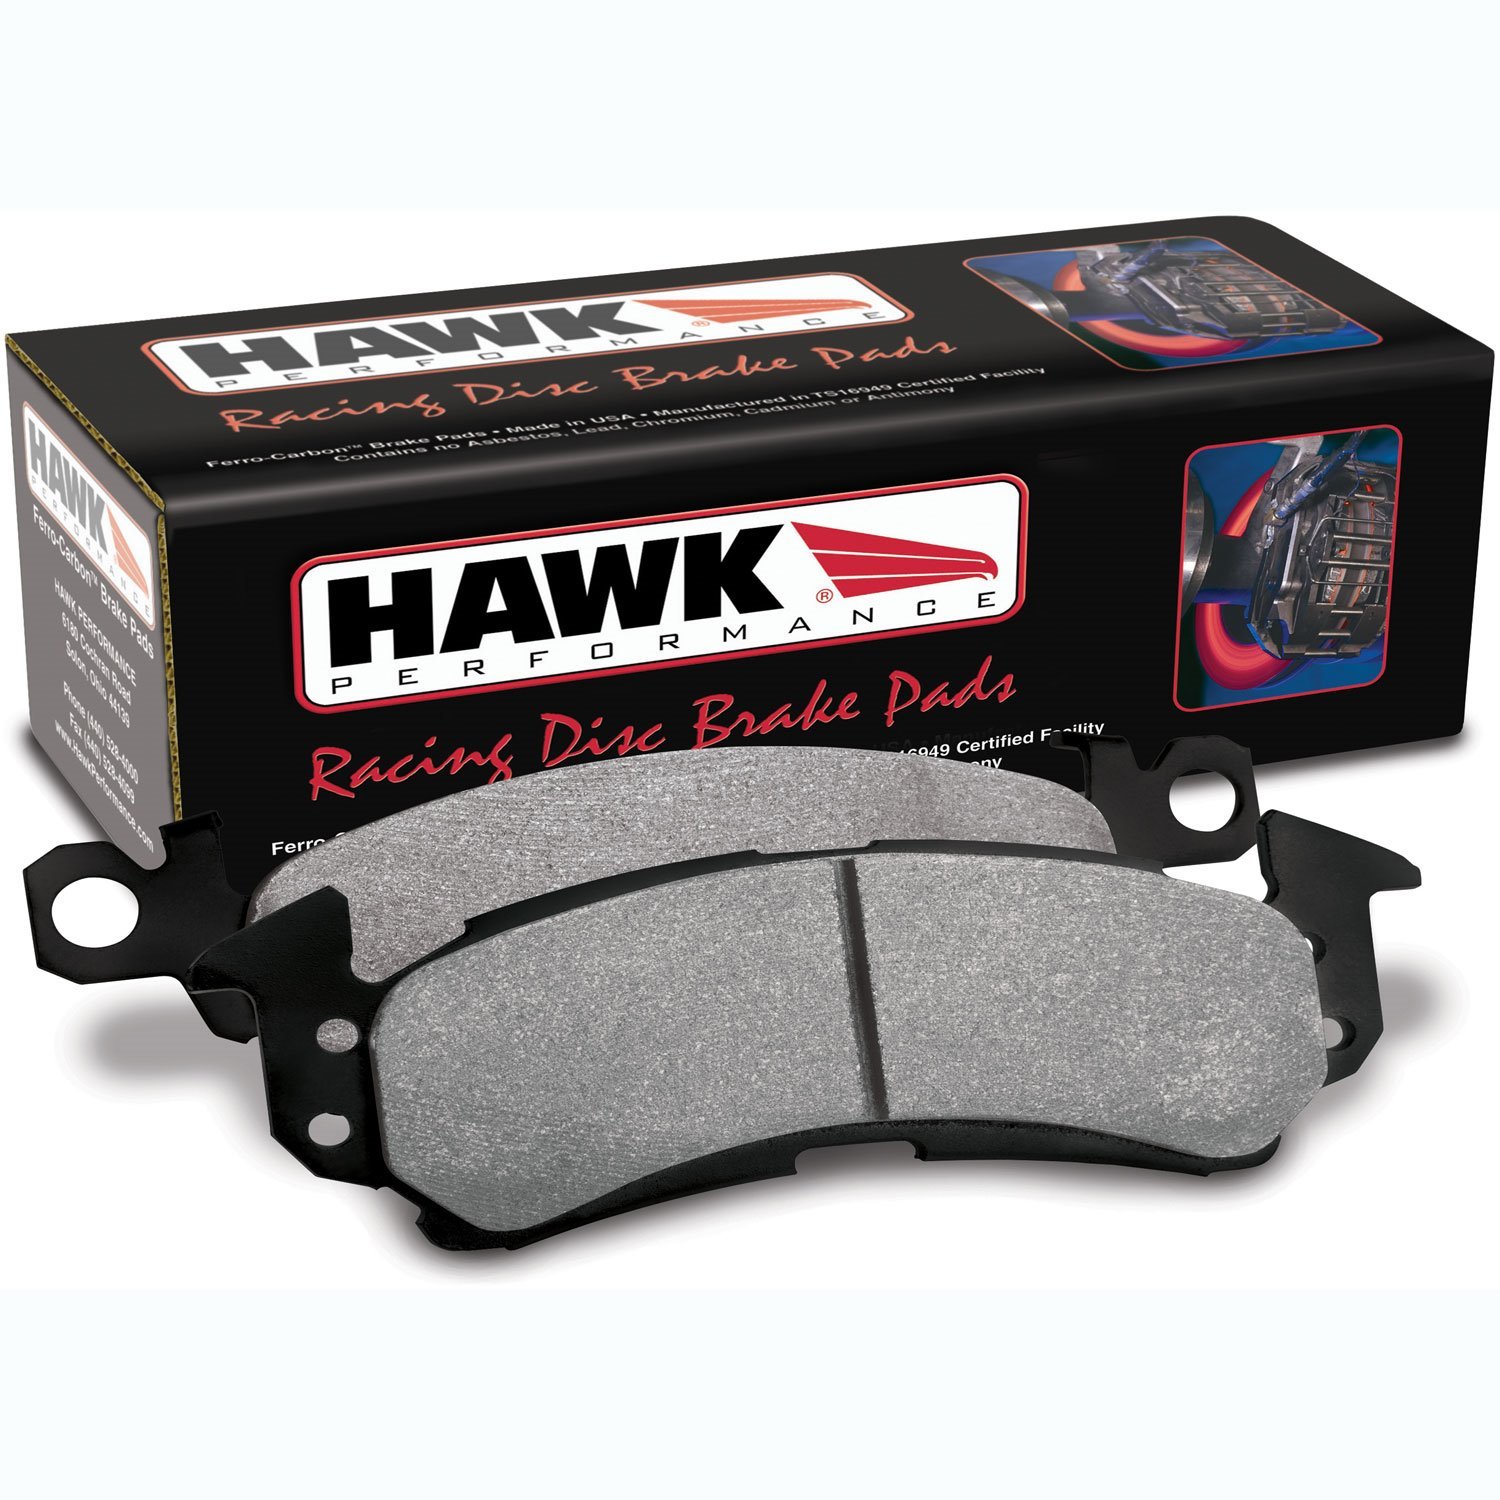 Disc Brake Pad HP Plus w/0.620 Thickness